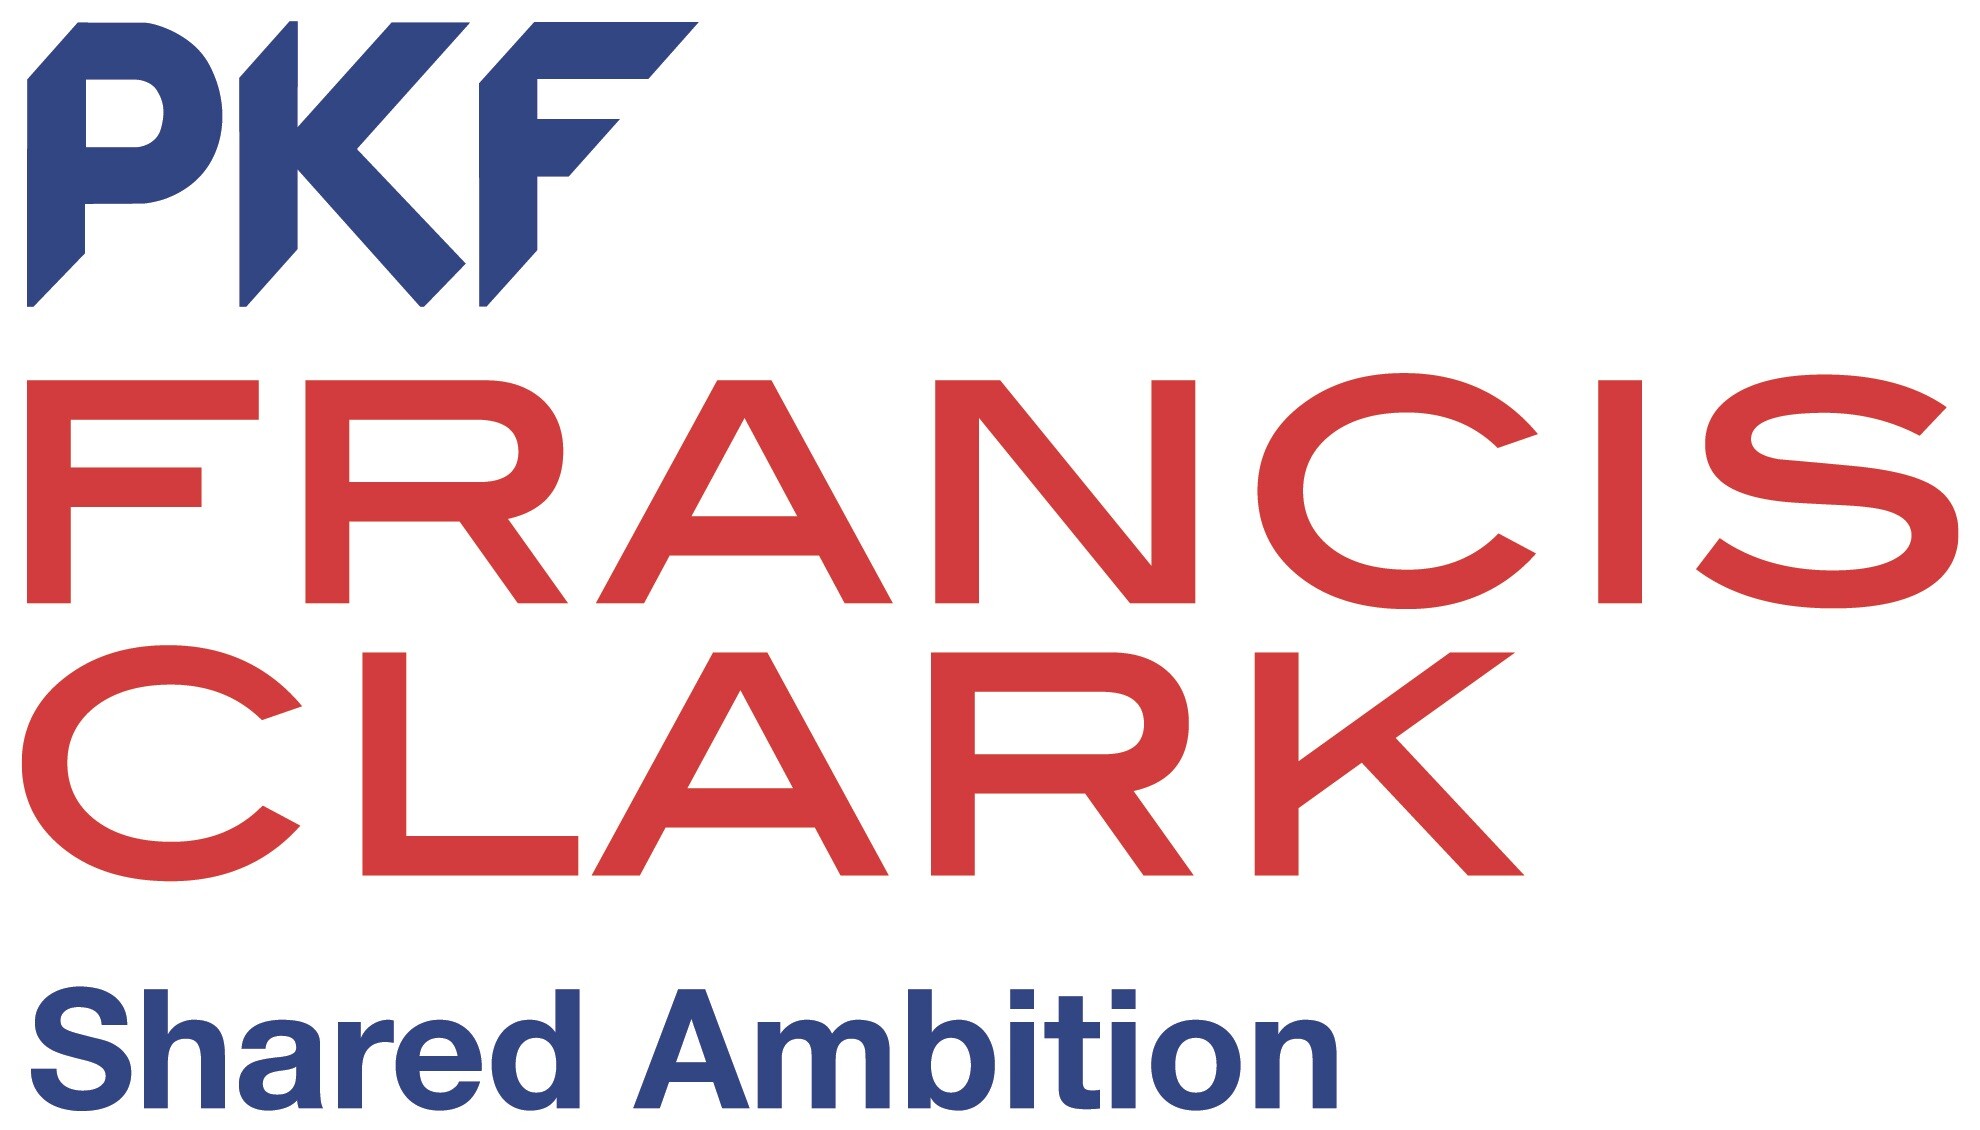 PFK Francis Clark logo on a white background.